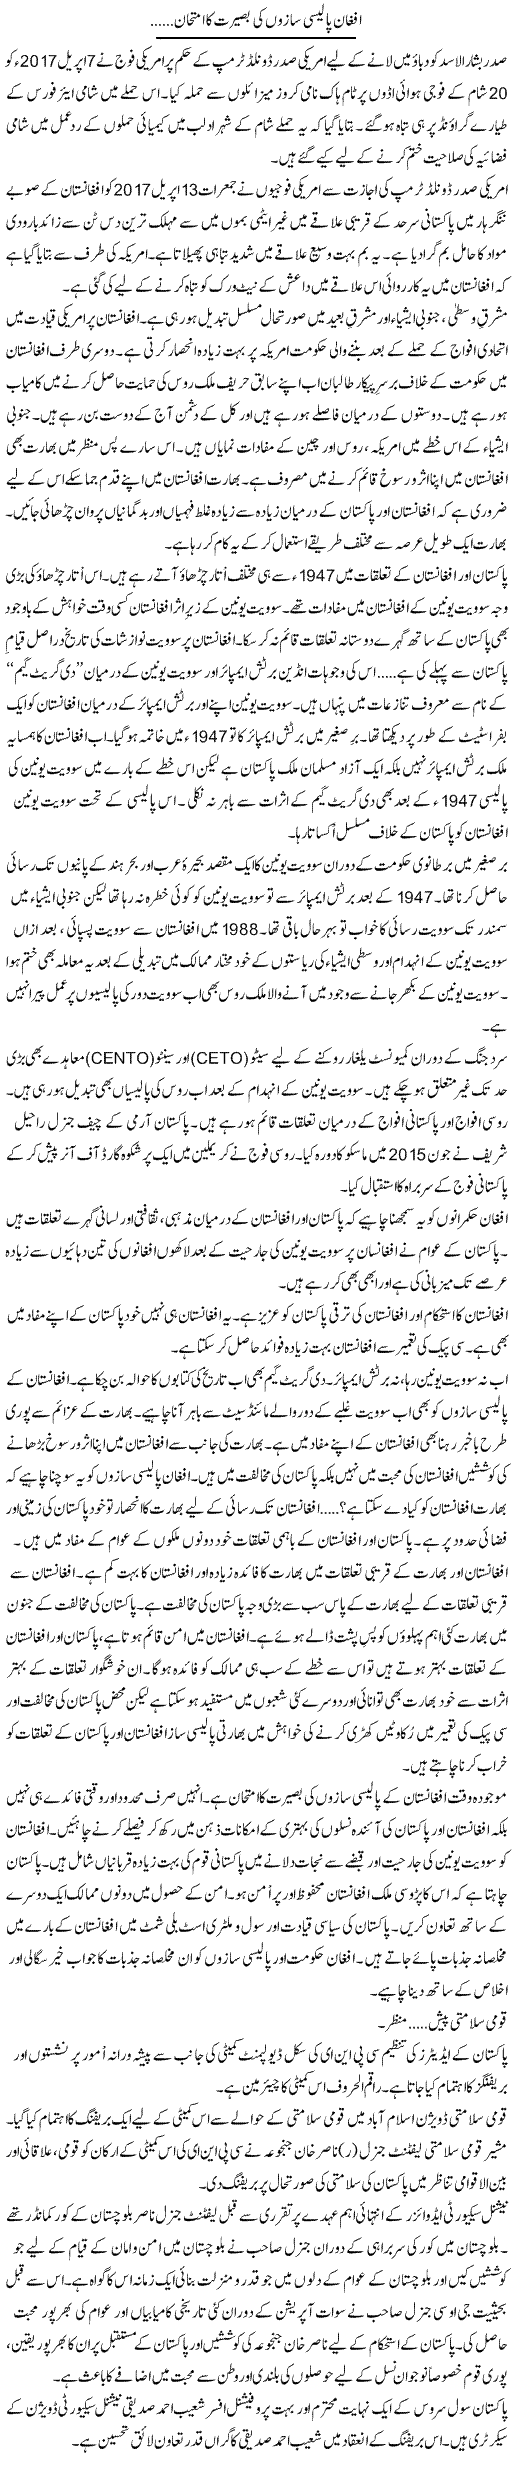 Afghan Policy Sazoon Ki Baseerat Ka Imtehan | Dr. Waqar Yousuf Azeemi | Daily Urdu Columns